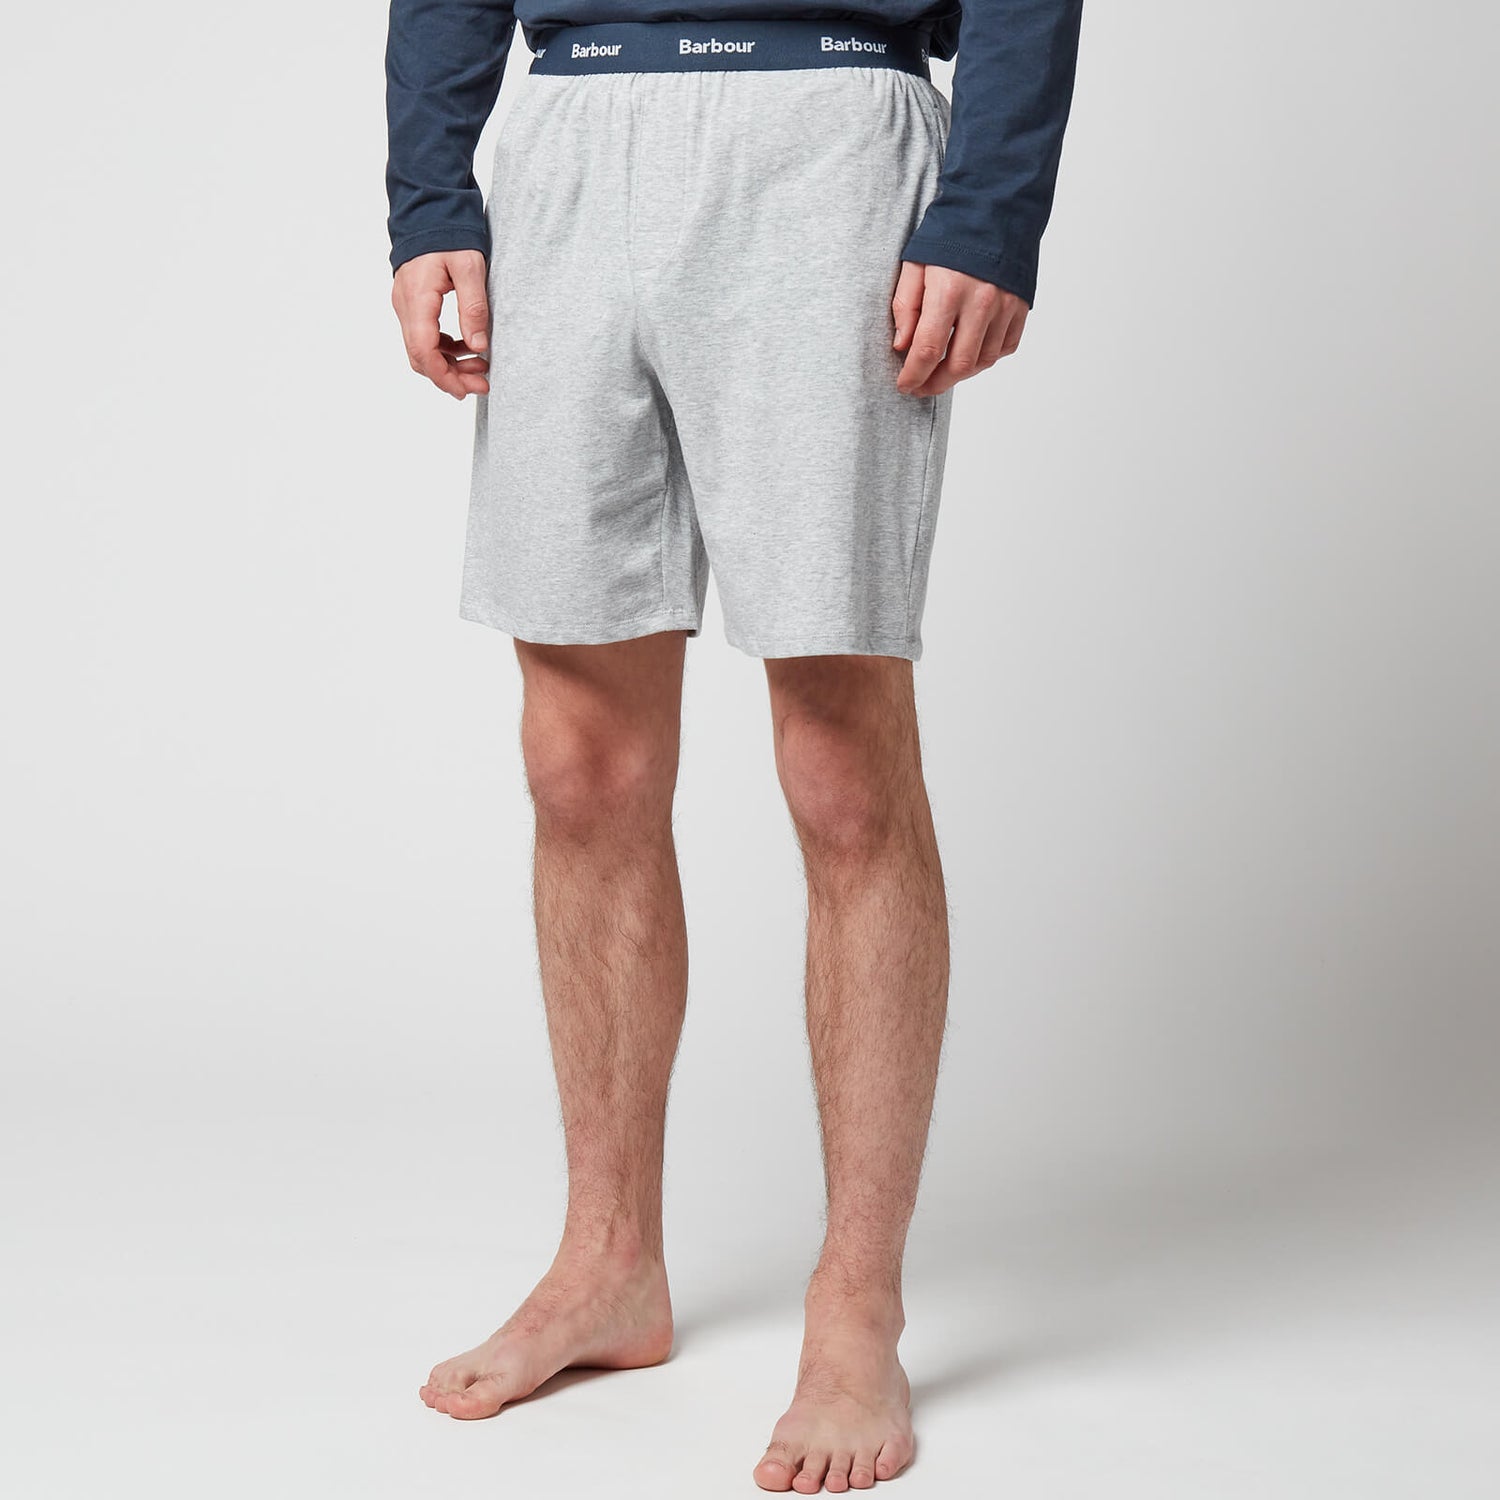 Barbour Heritage Men's Abbott Shorts - Light Grey Marl